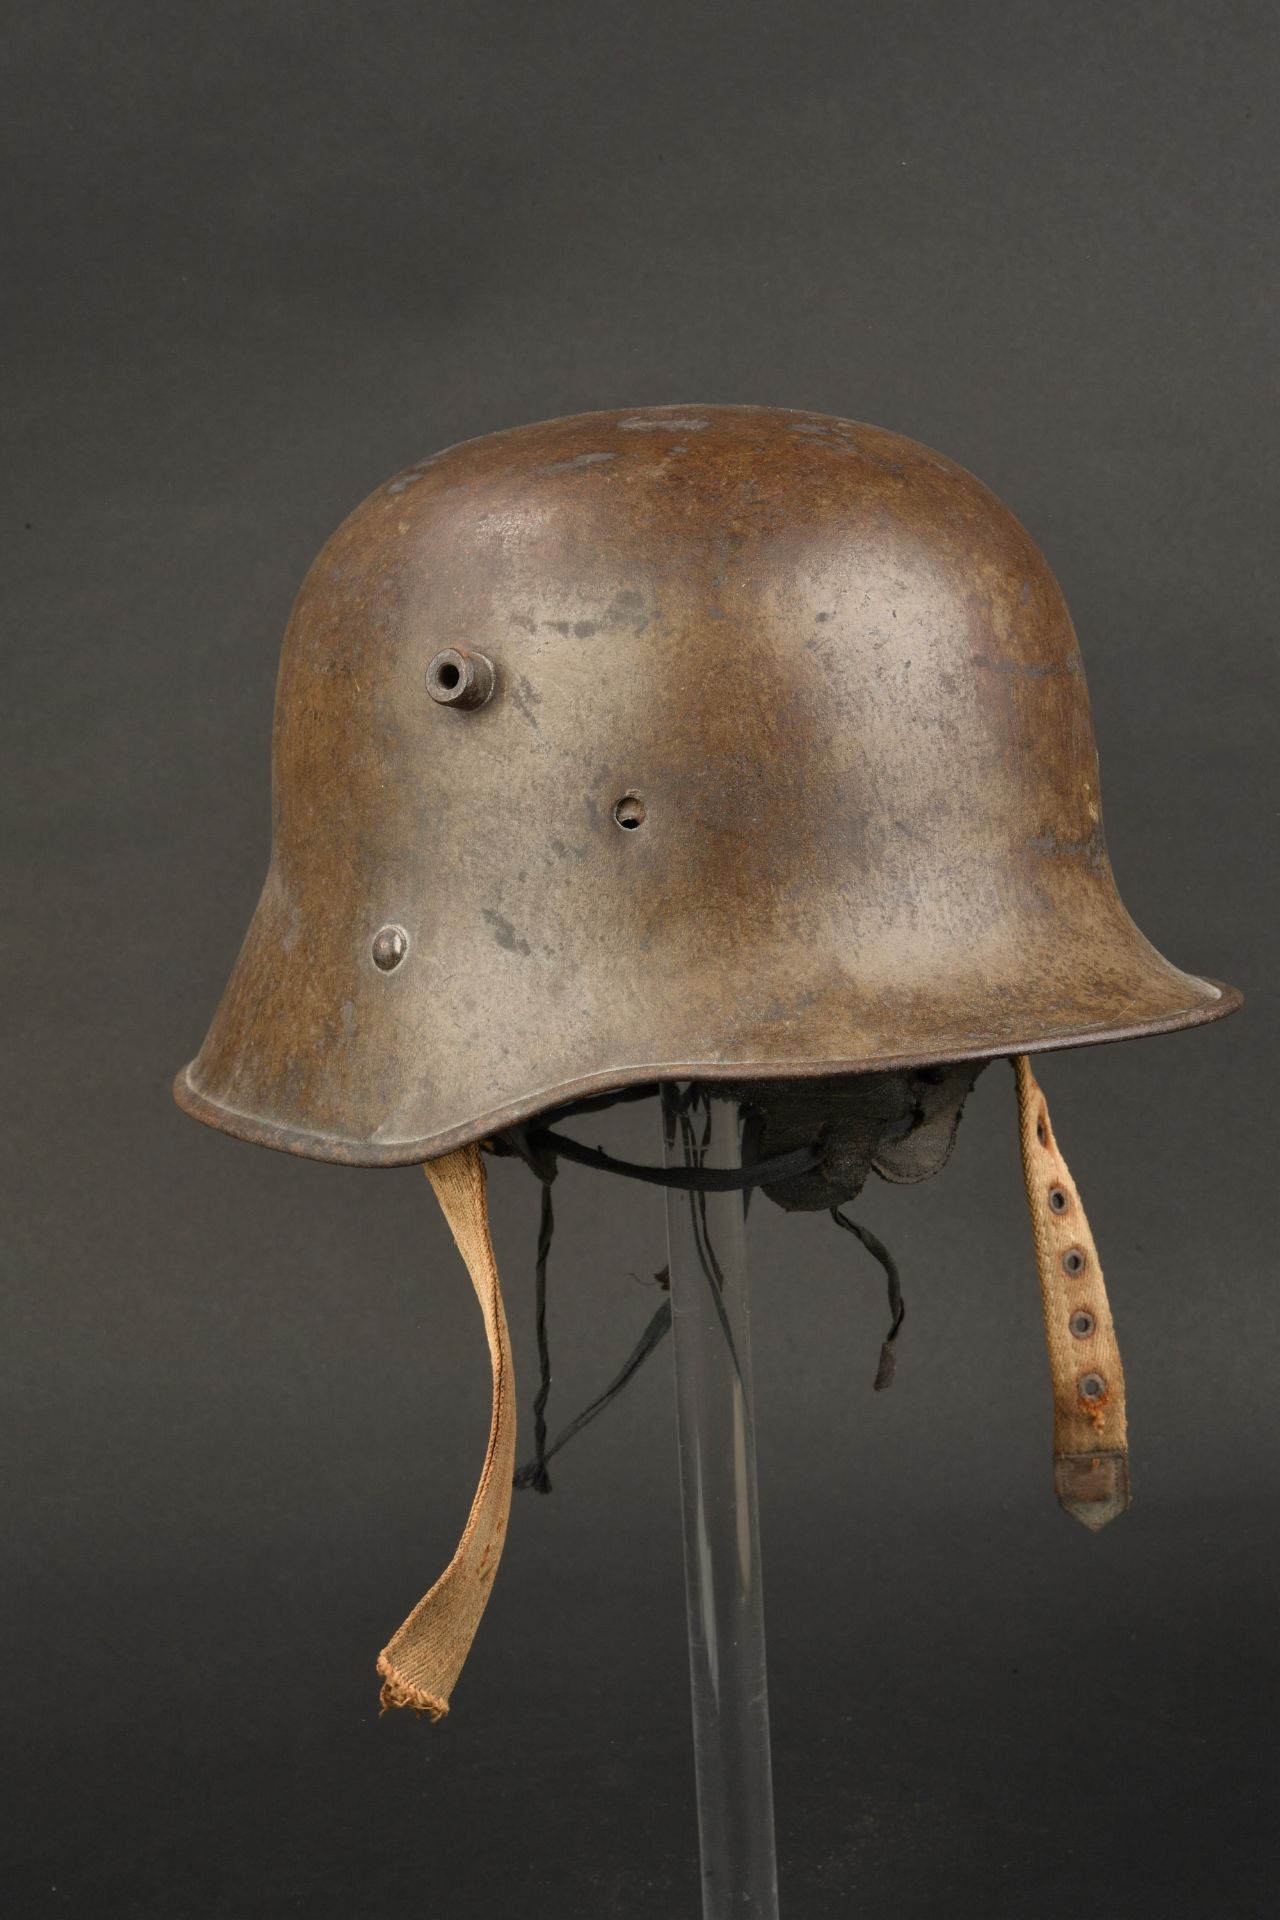 Casque 1917 autrichien. Austrian 1917 helmet.